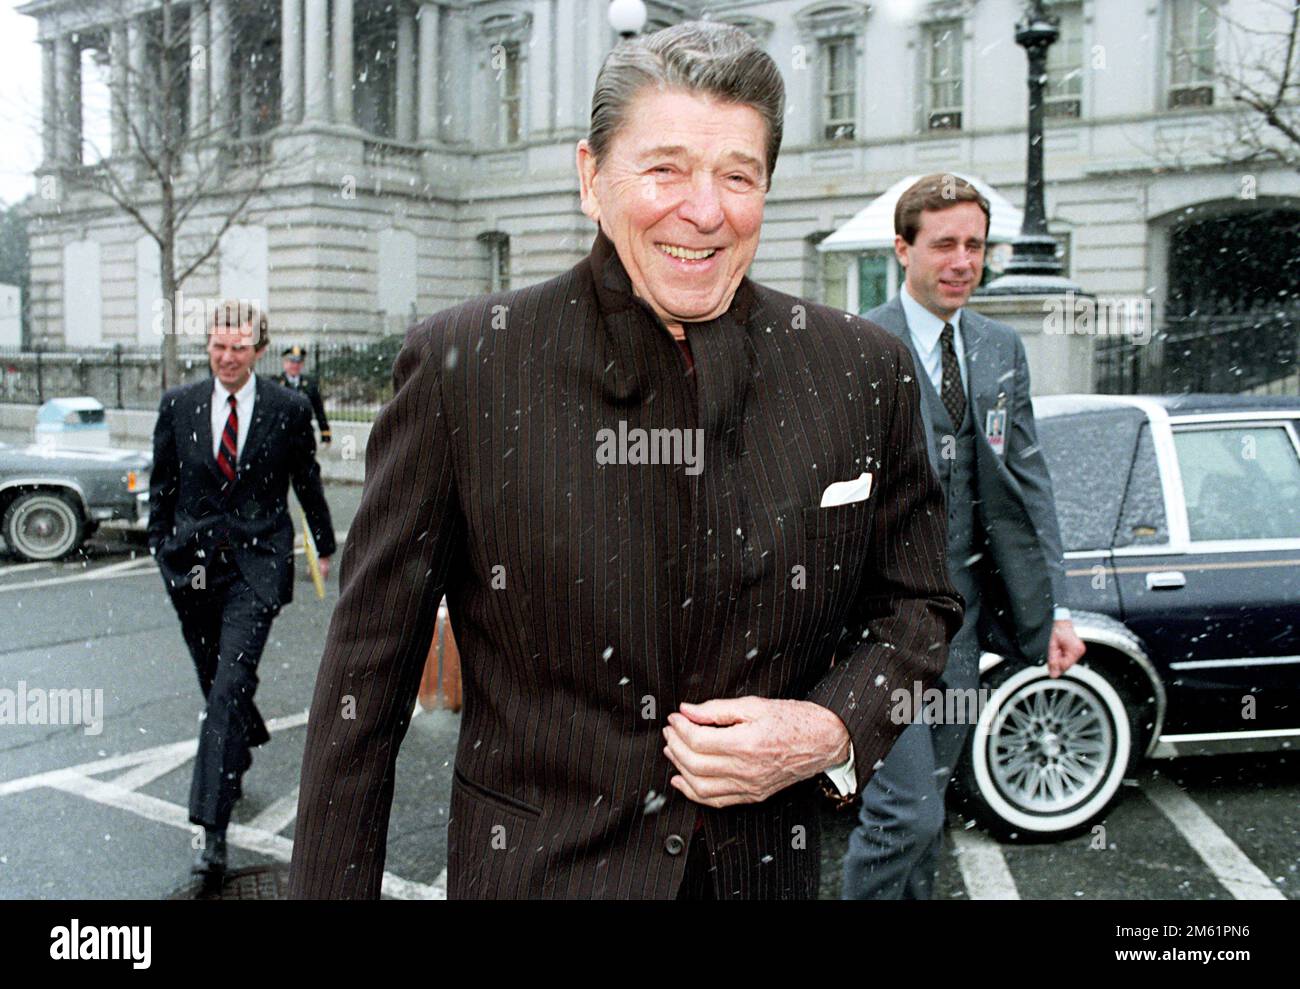 1/27/1986 President Reagan walking back to White House while it snows President Ronald Reagan Walking Back to White House While It Snows, January 27, 1986 Stock Photo